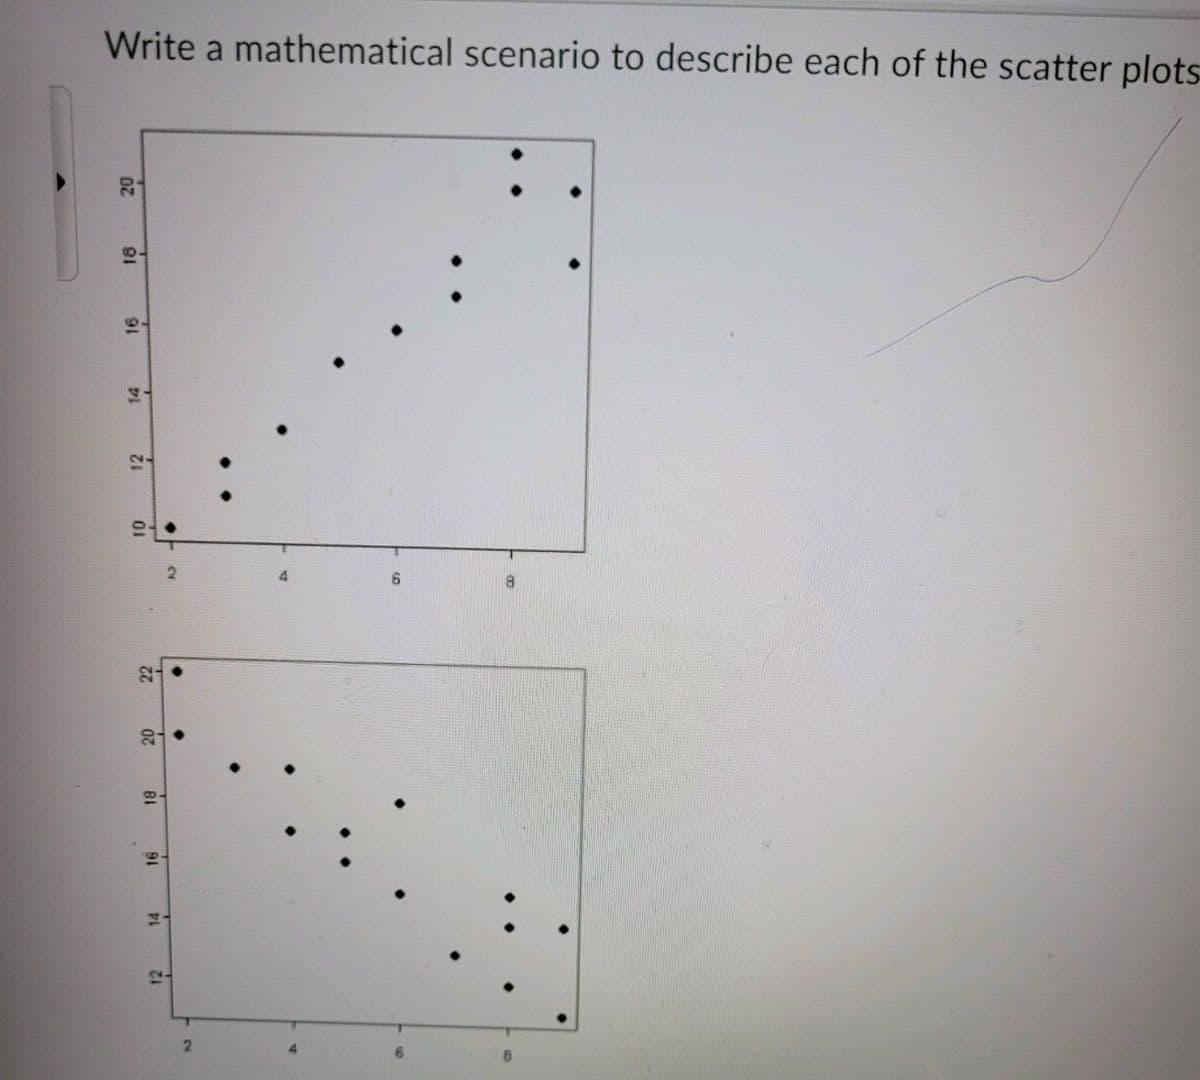 Write a mathematical scenario to describe each of the scatter plots
4.
12
12
14
91
